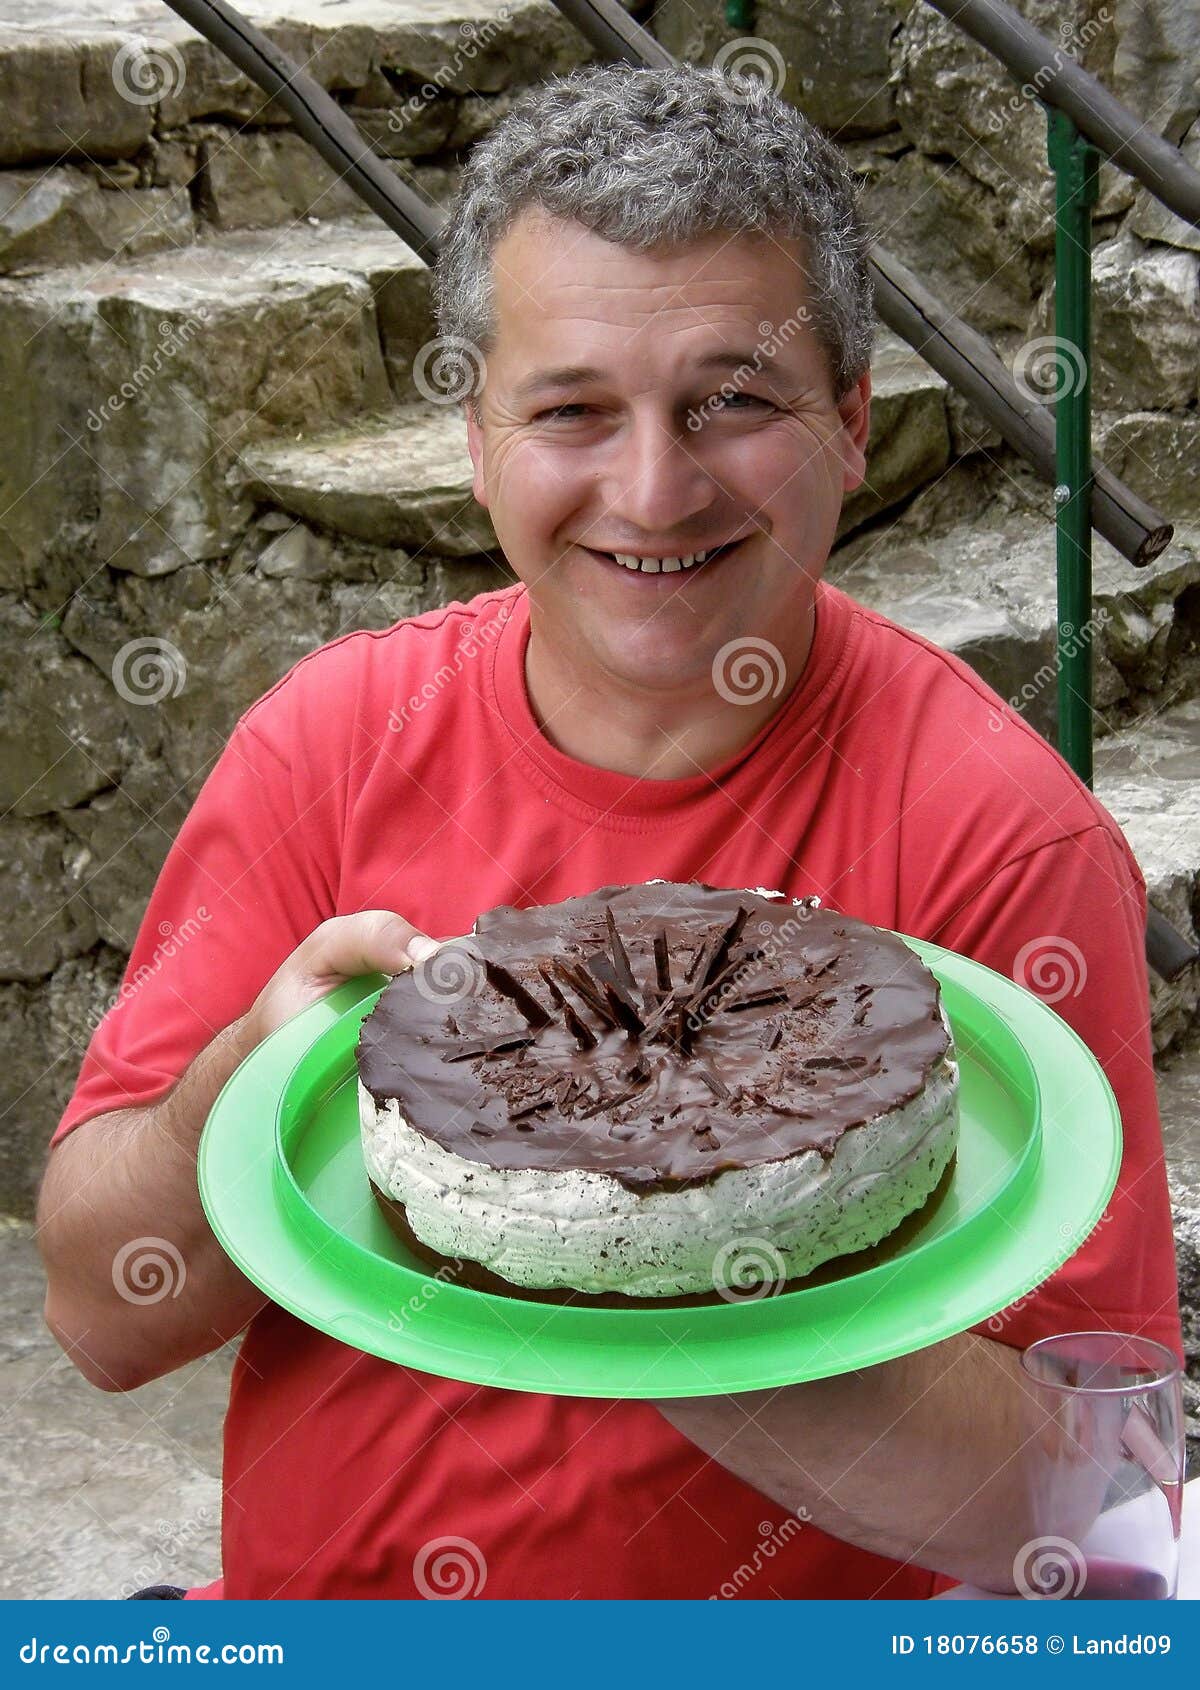 Happy Man With Birthday Cake Stock Photography | CartoonDealer.com ...